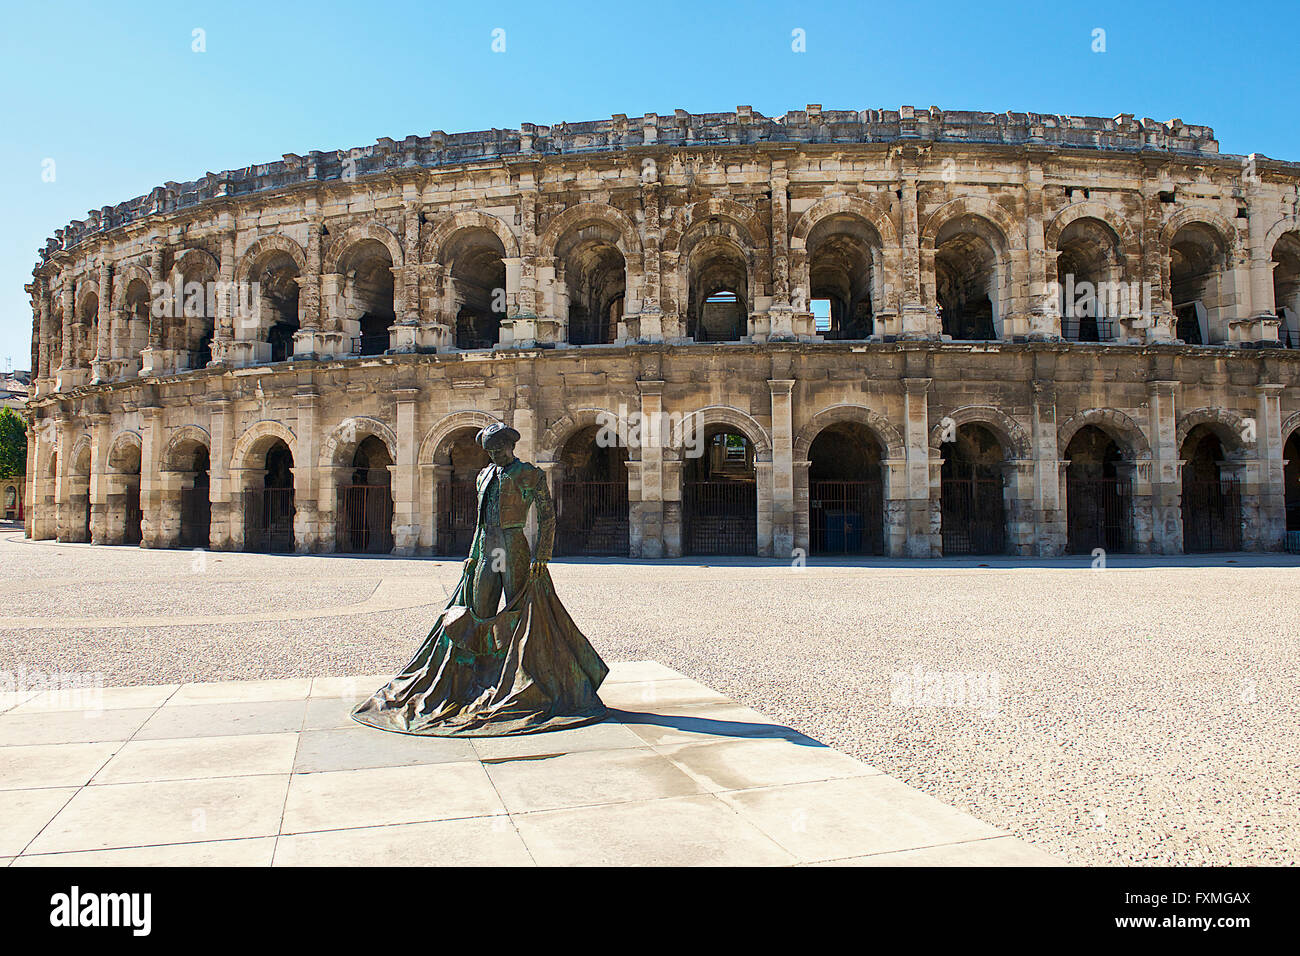 Die Arena von Nîmes, Nimes, Frankreich Stockfoto